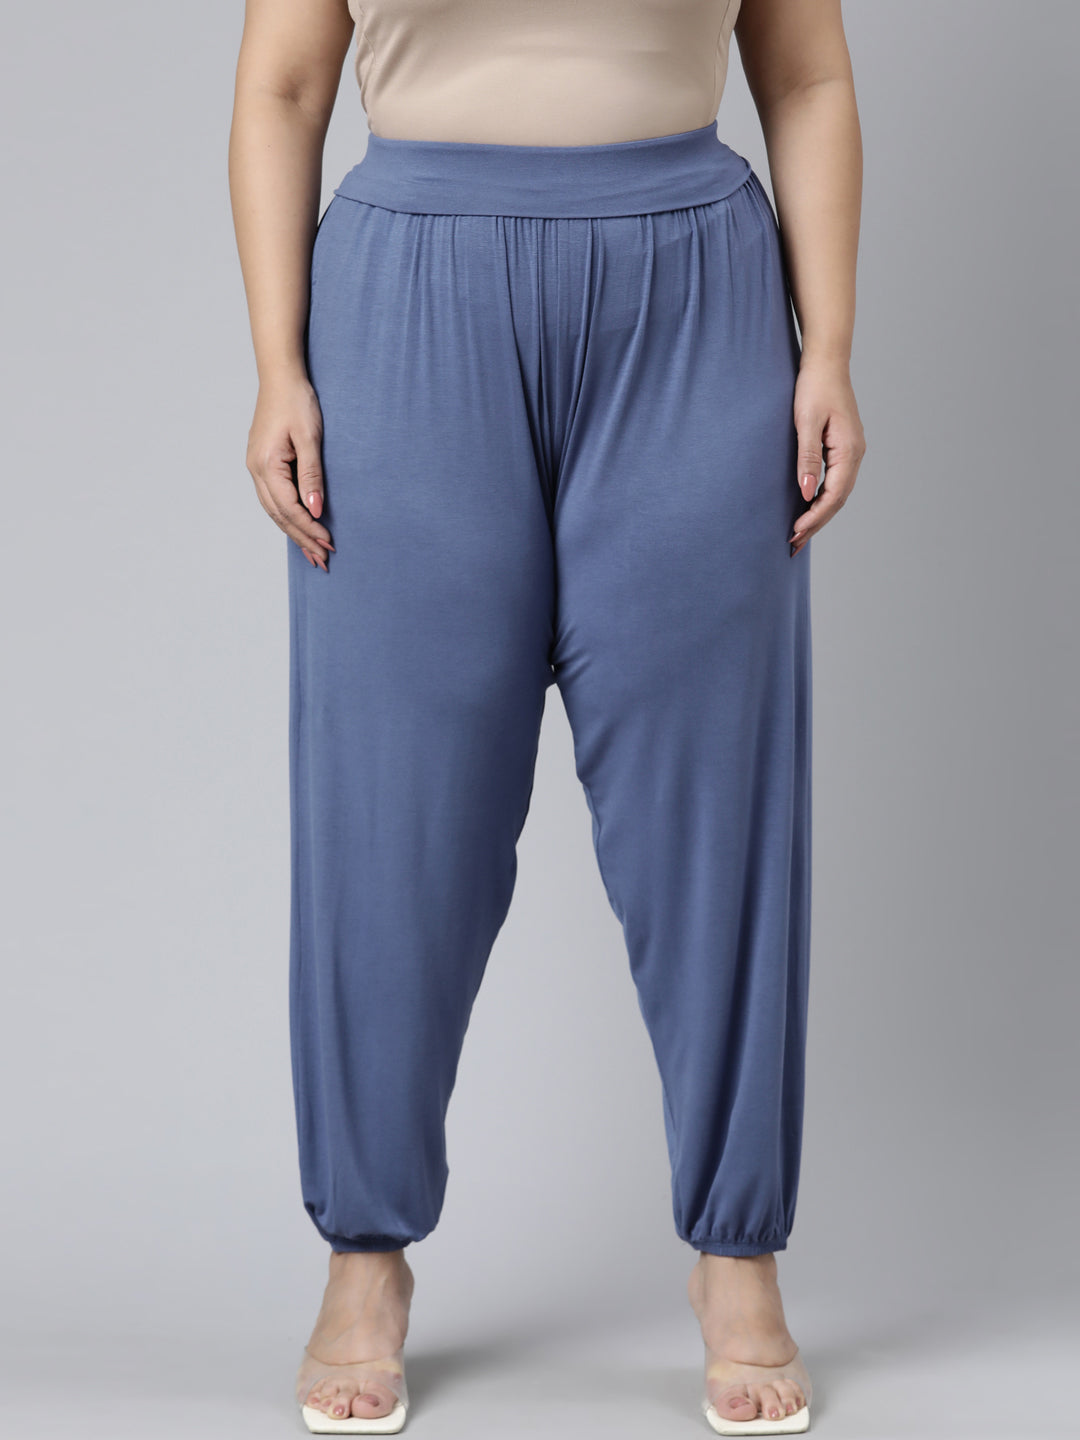 Ladies Blue Printed Rayon Harem Pants, Waist Size: 28.0 at Rs 250